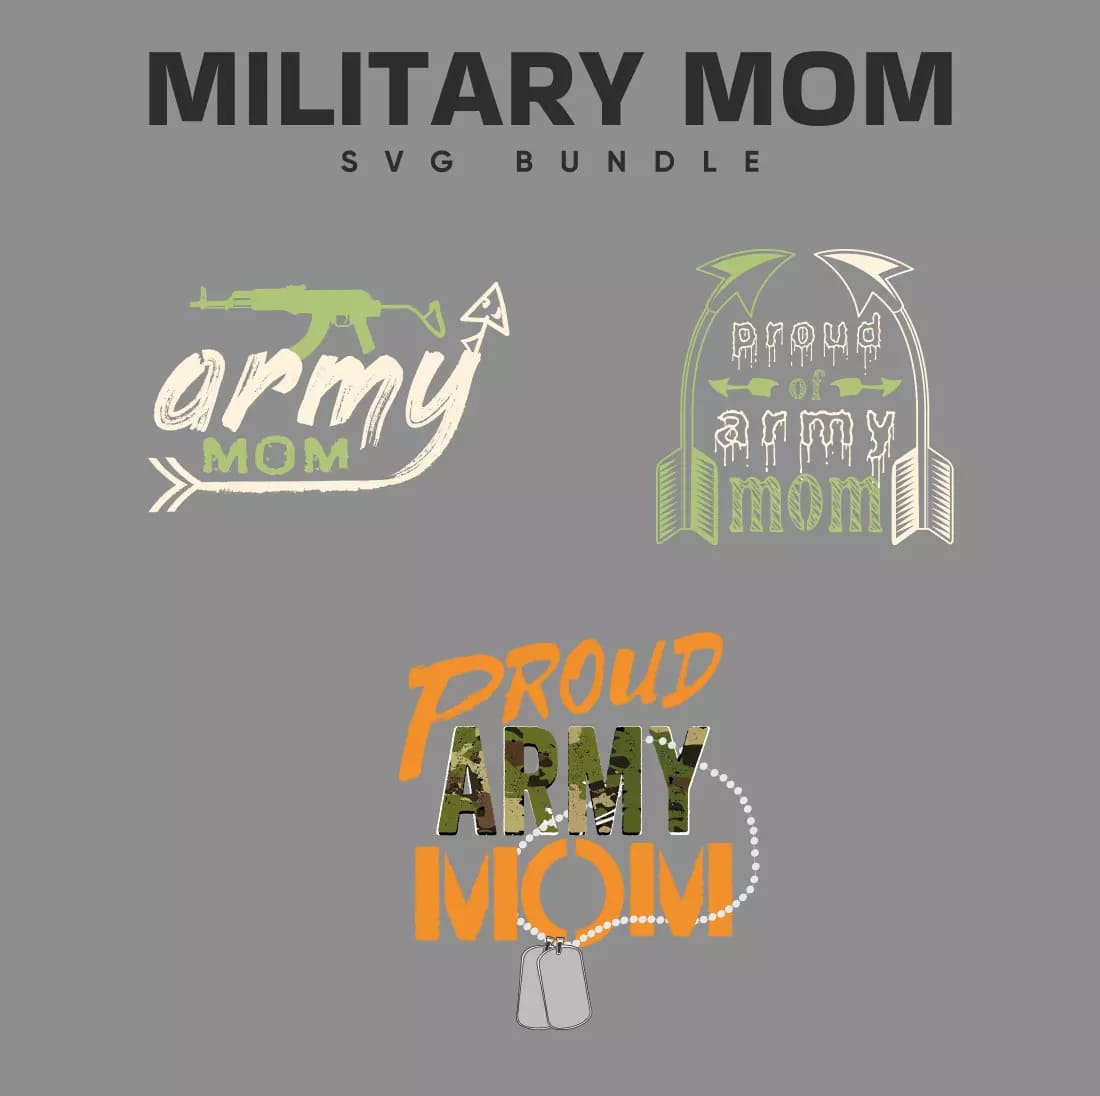 Military Mom SVG Bundle Preview.